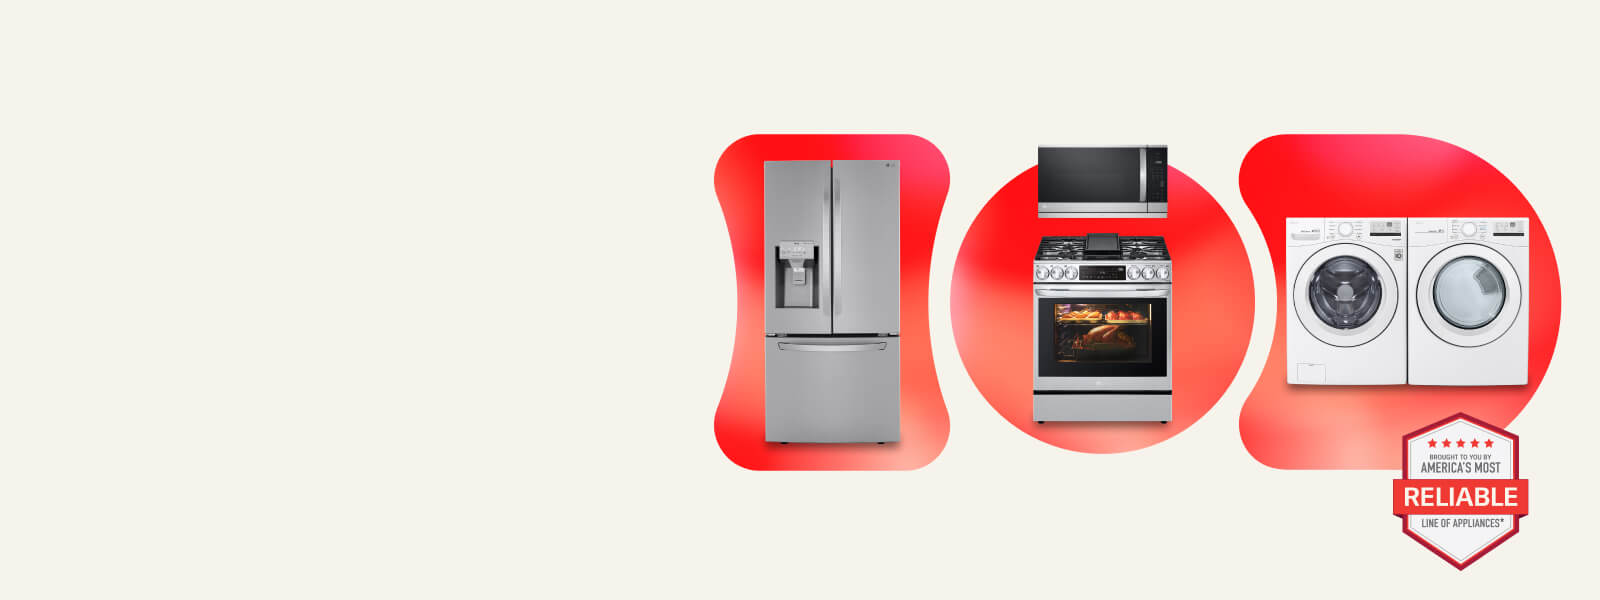 Save on summer-ready appliances image for desktop